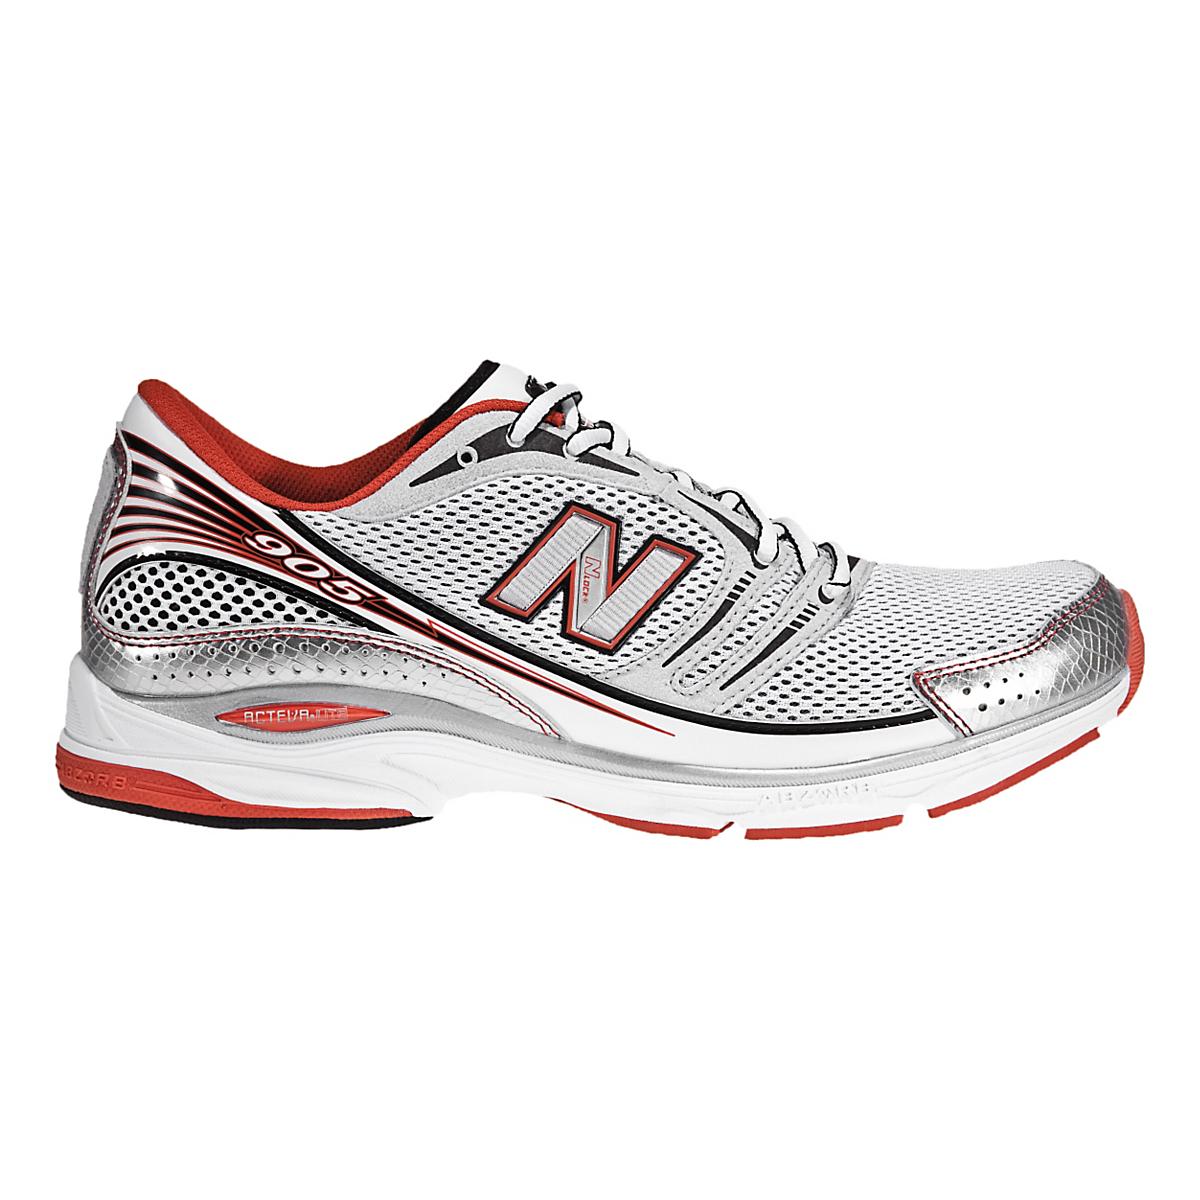 Mens New Balance 905 Running Shoe at Road Runner Sports